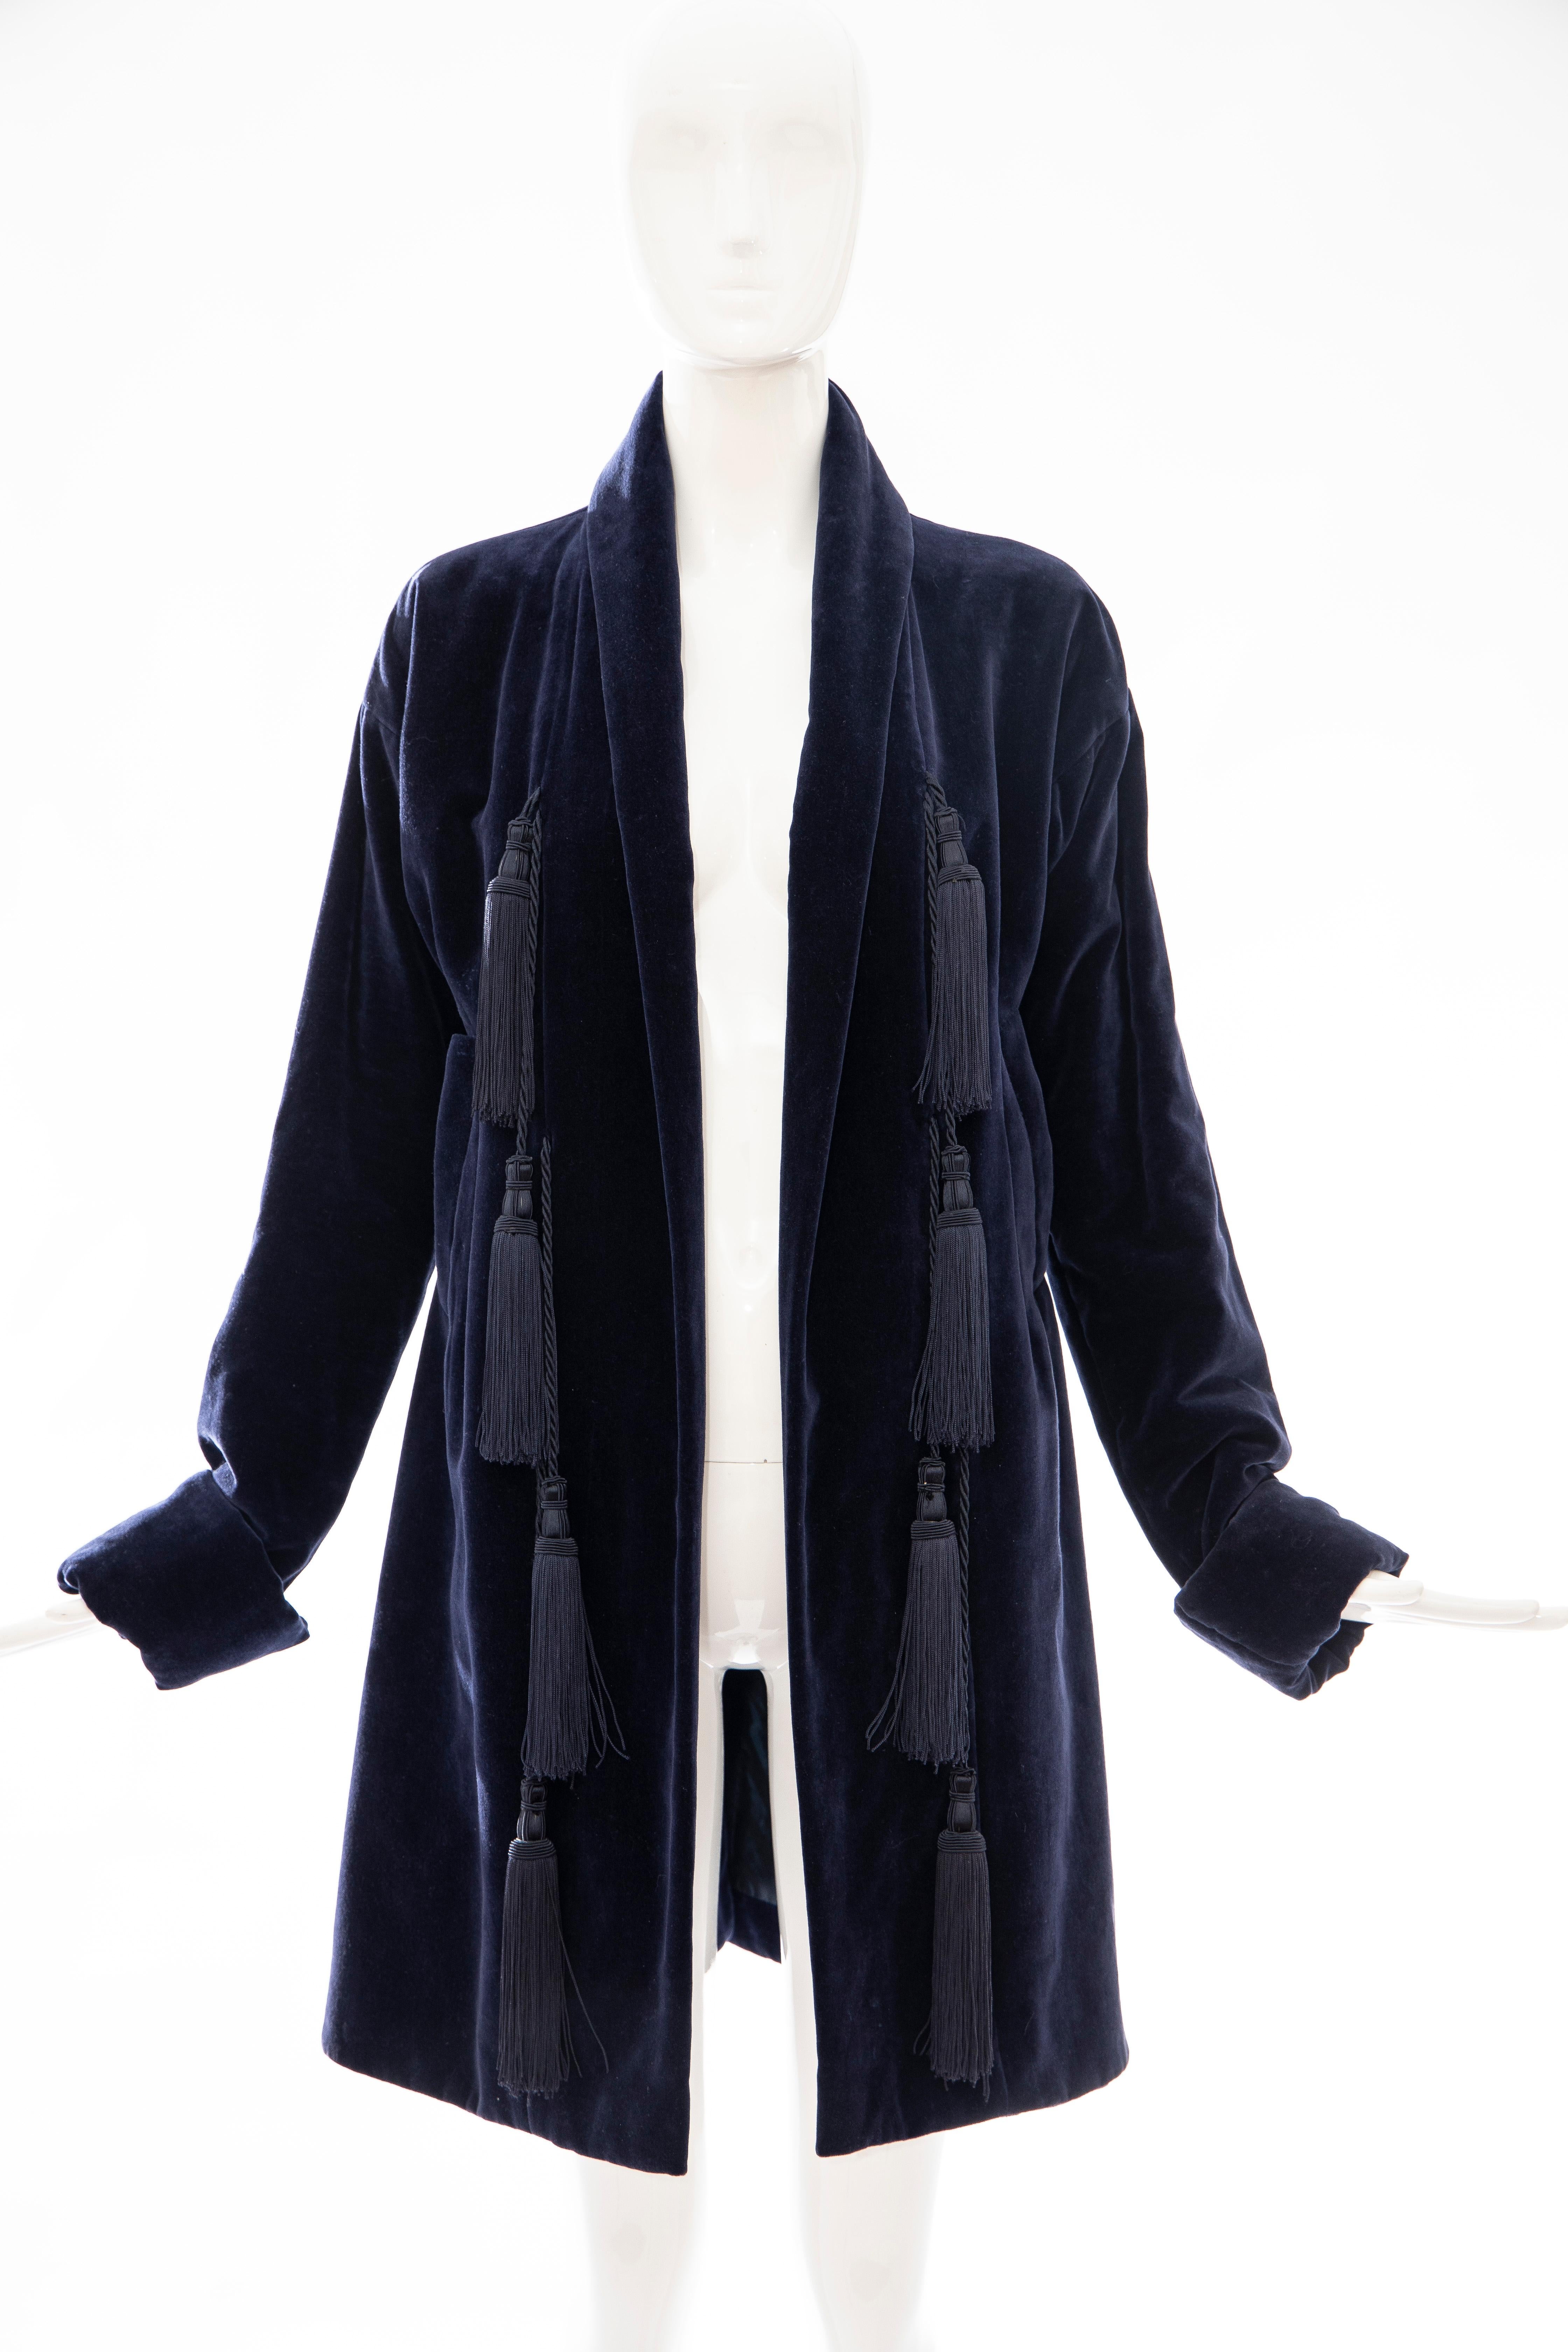 Romeo Gigli Navy Blue Cotton Velvet Appliquéd Tassels Kimono Jacket, Fall 1994 For Sale 4